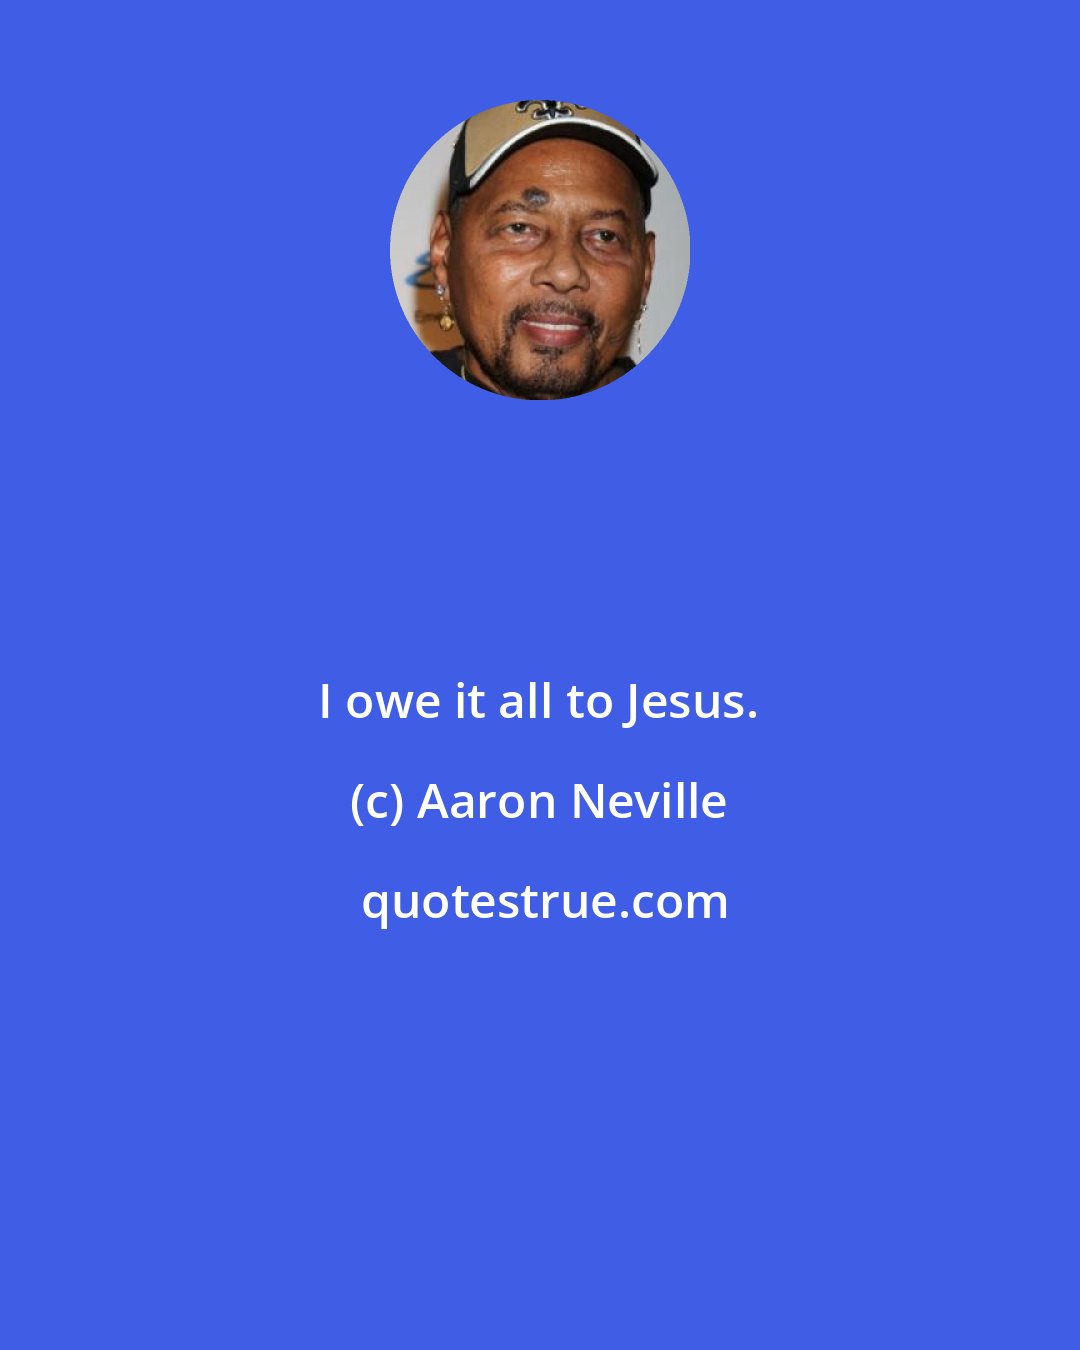 Aaron Neville: I owe it all to Jesus.